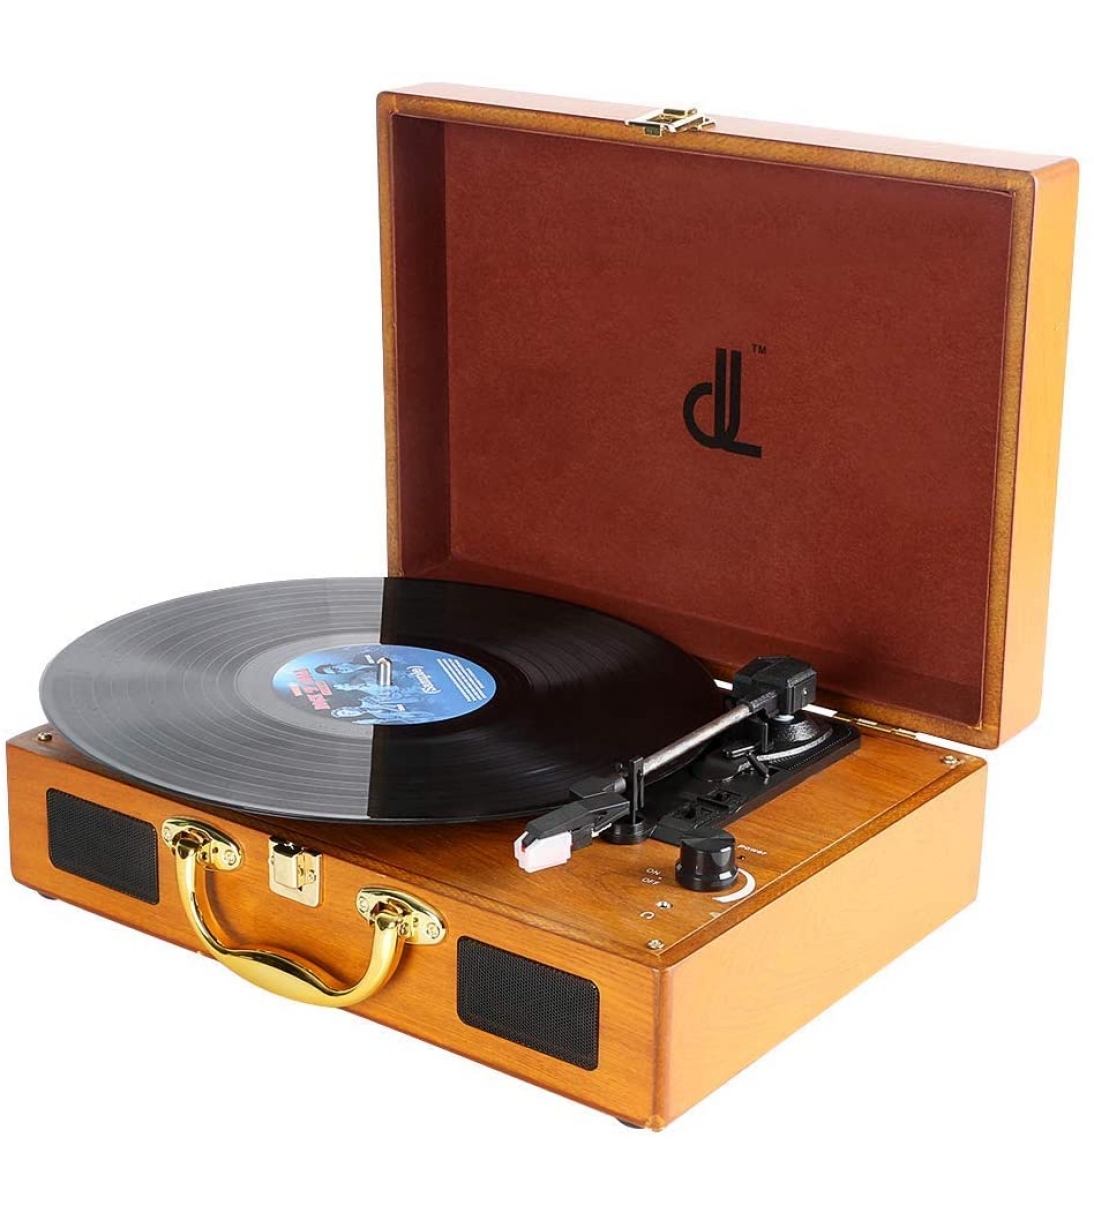 Giradischi Vintage dl Record Player 33/45/78 